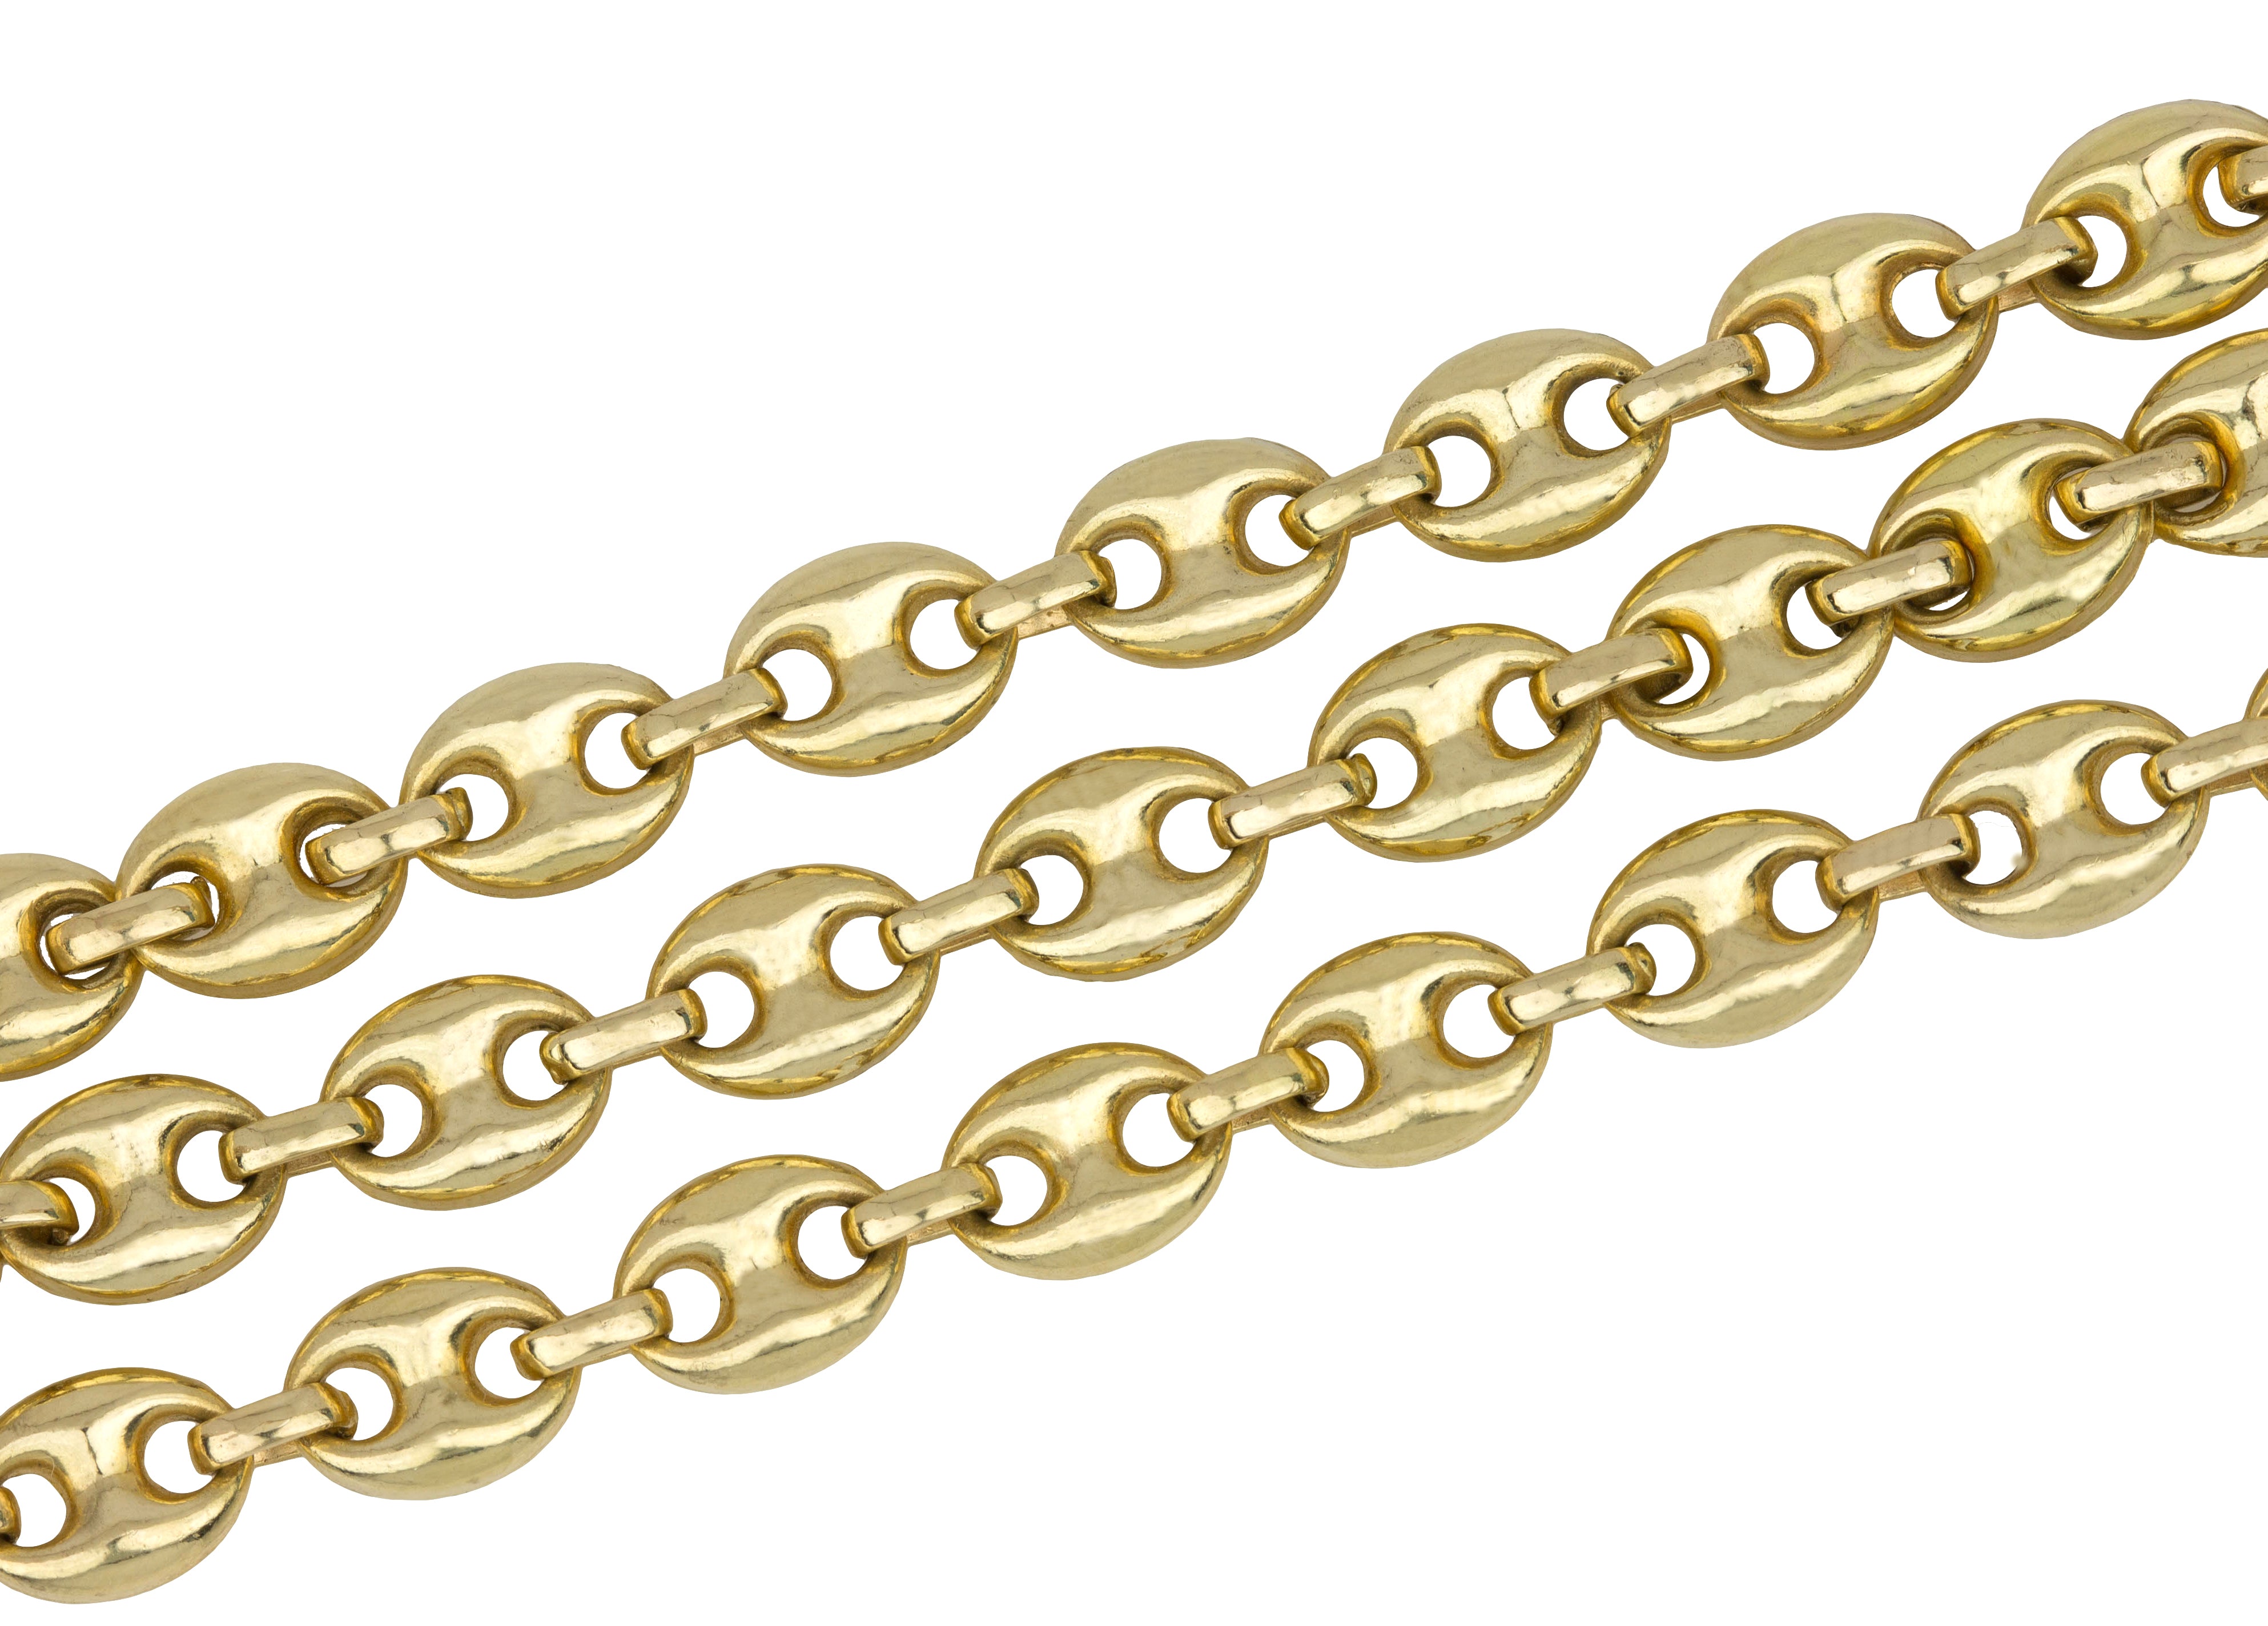 gucci link chain